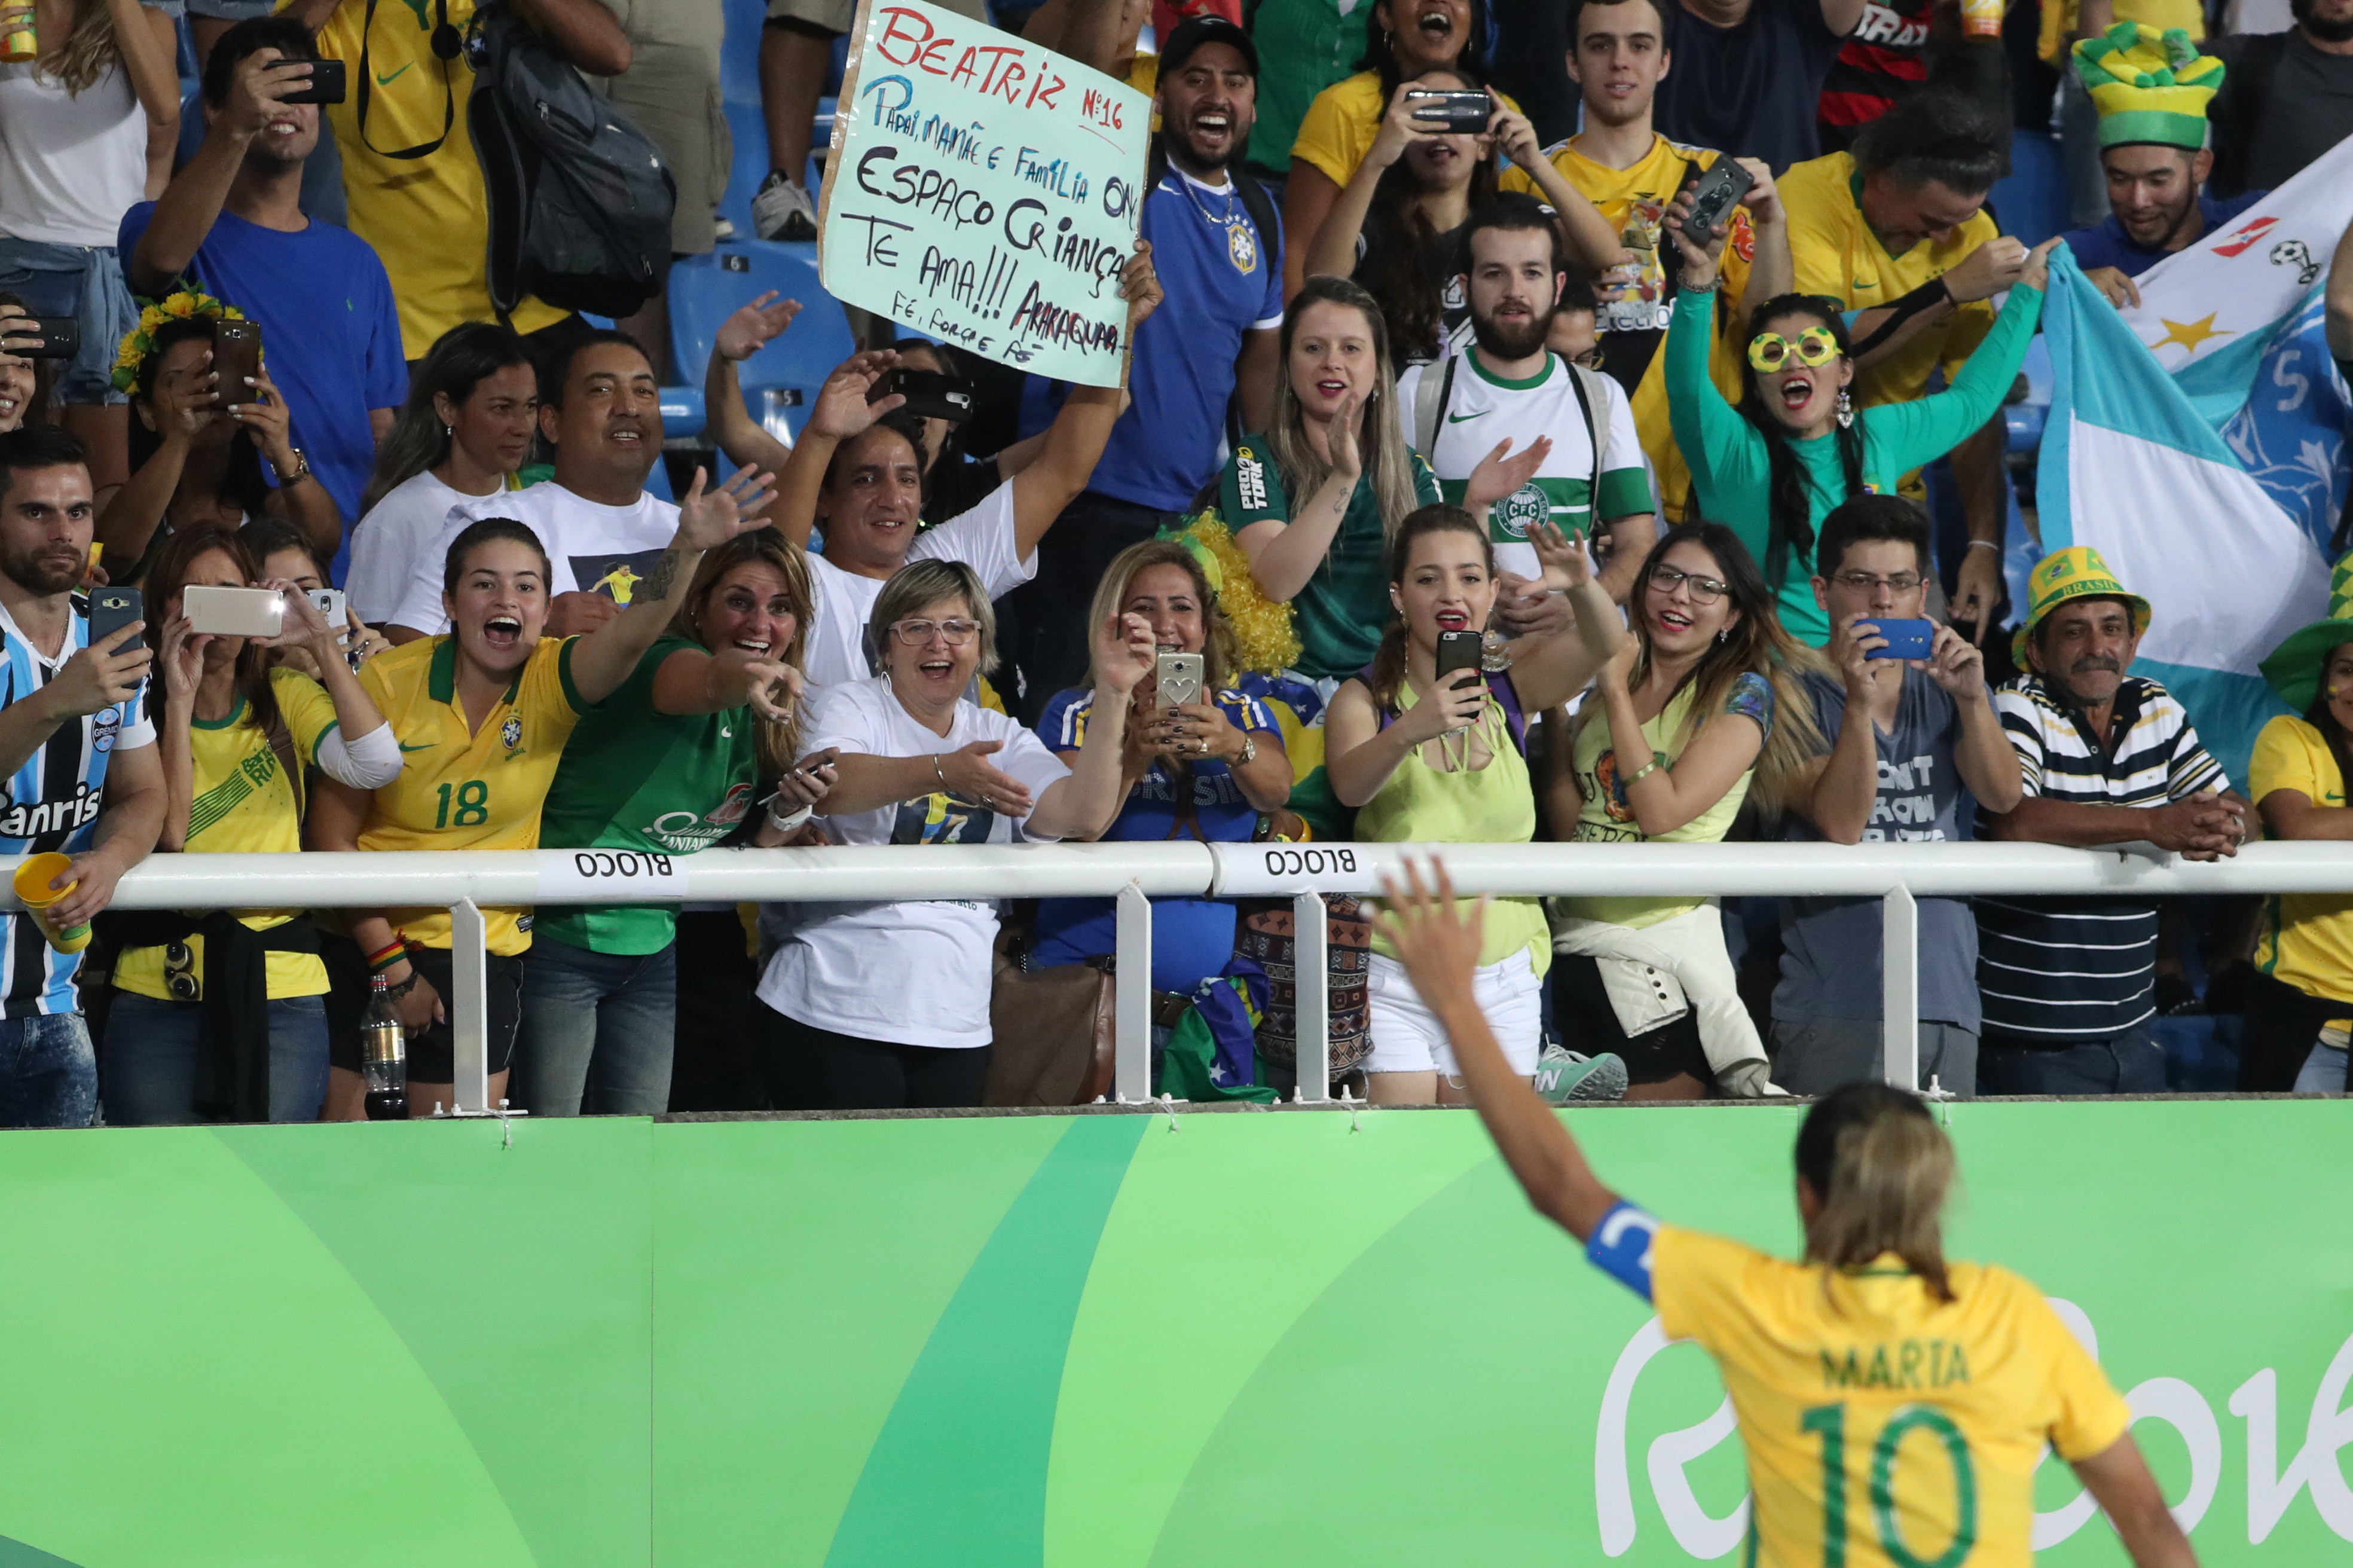 With Neymar struggling, Brazilian soccer fans turn to Marta – The